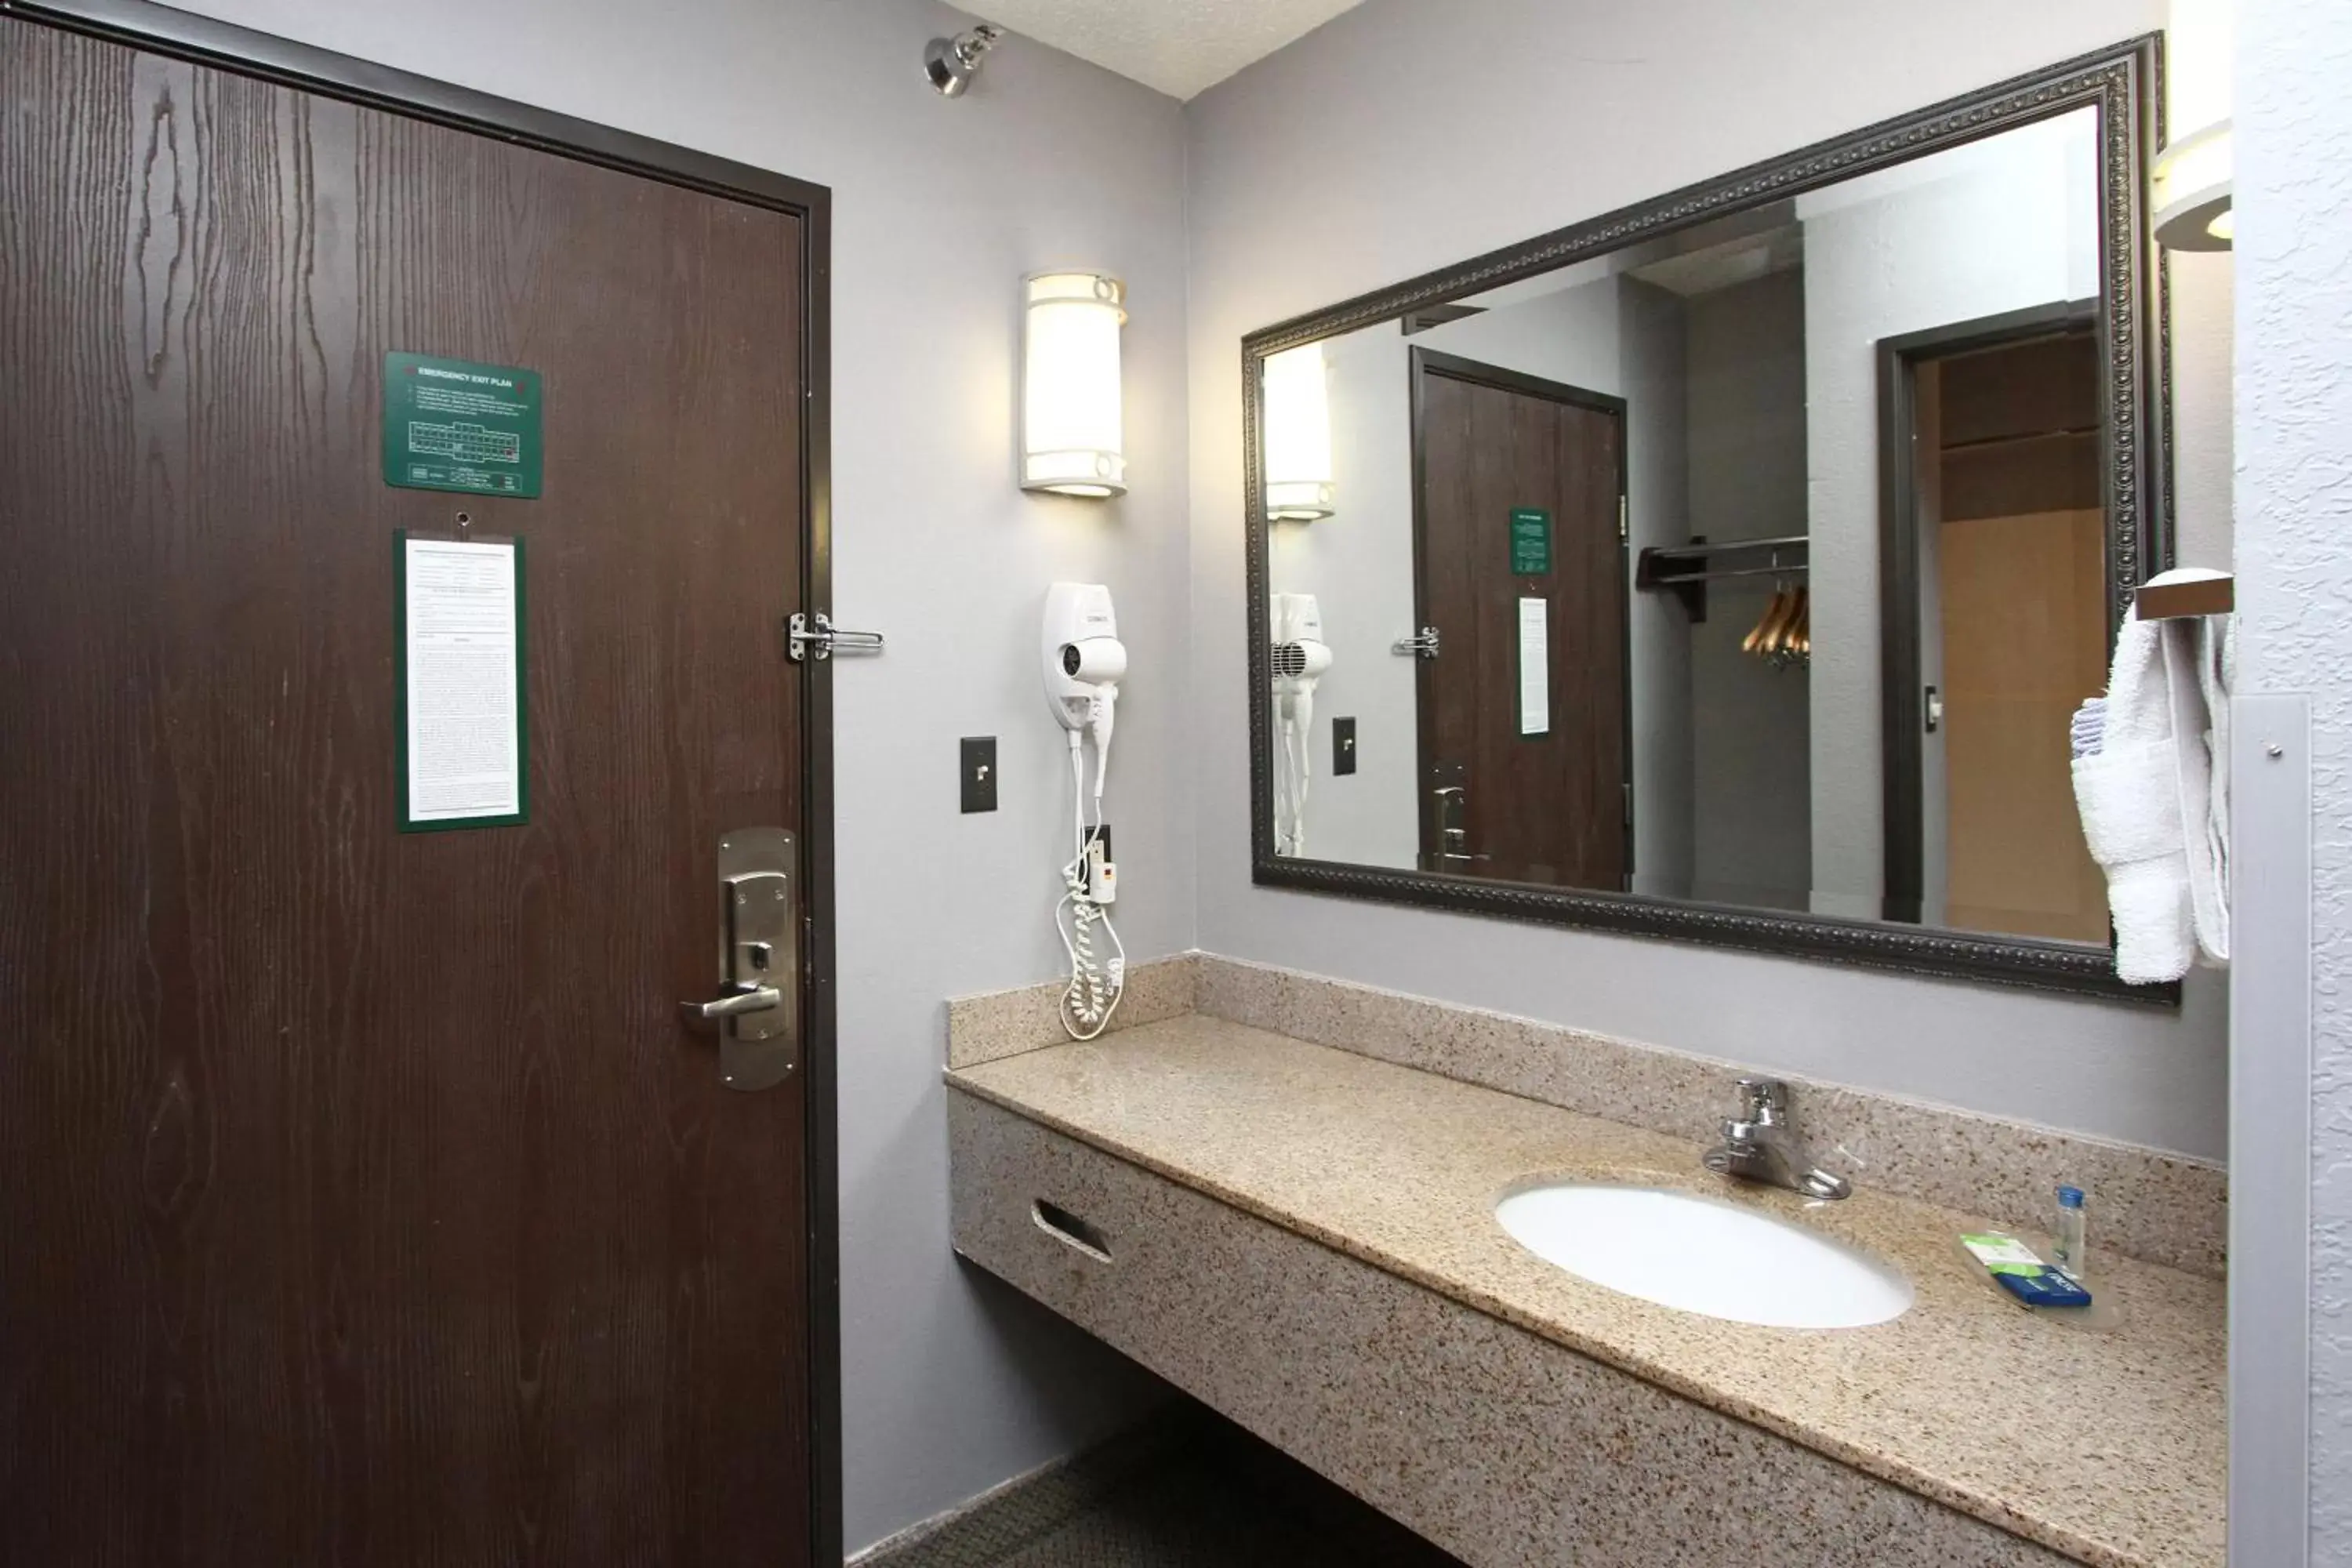 Area and facilities, Bathroom in New Victorian Inn - Sioux City